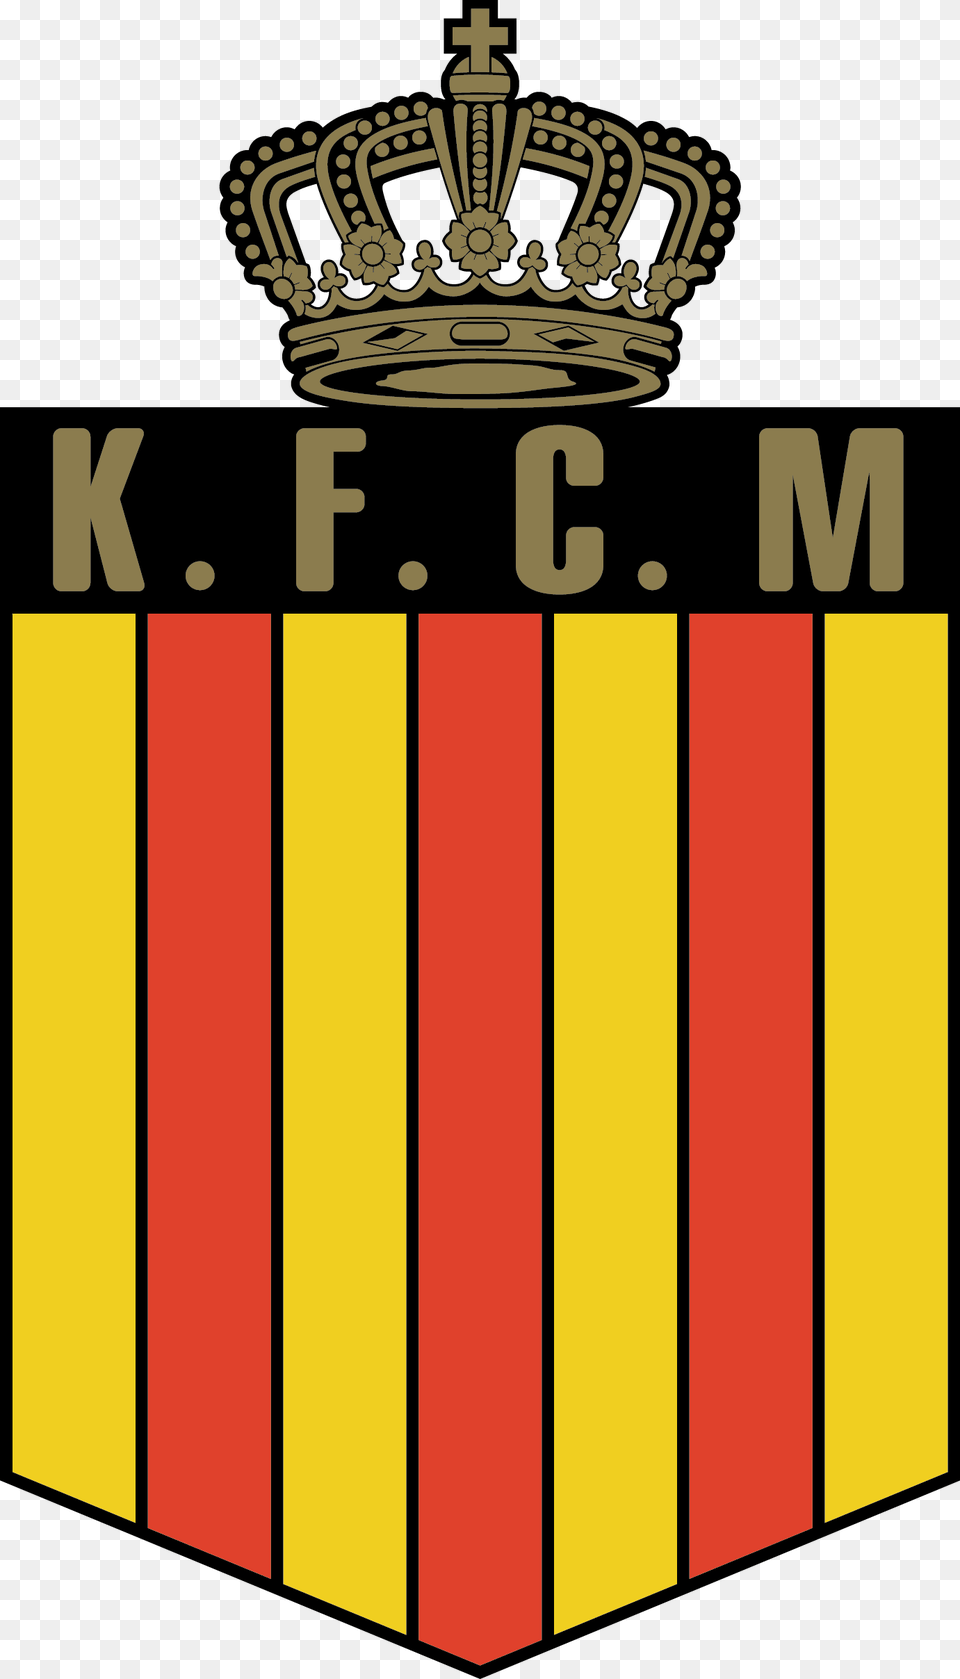 Kfc Mechelen Football Logo In Football Kfc, Emblem, Symbol, Accessories, Cross Free Png Download